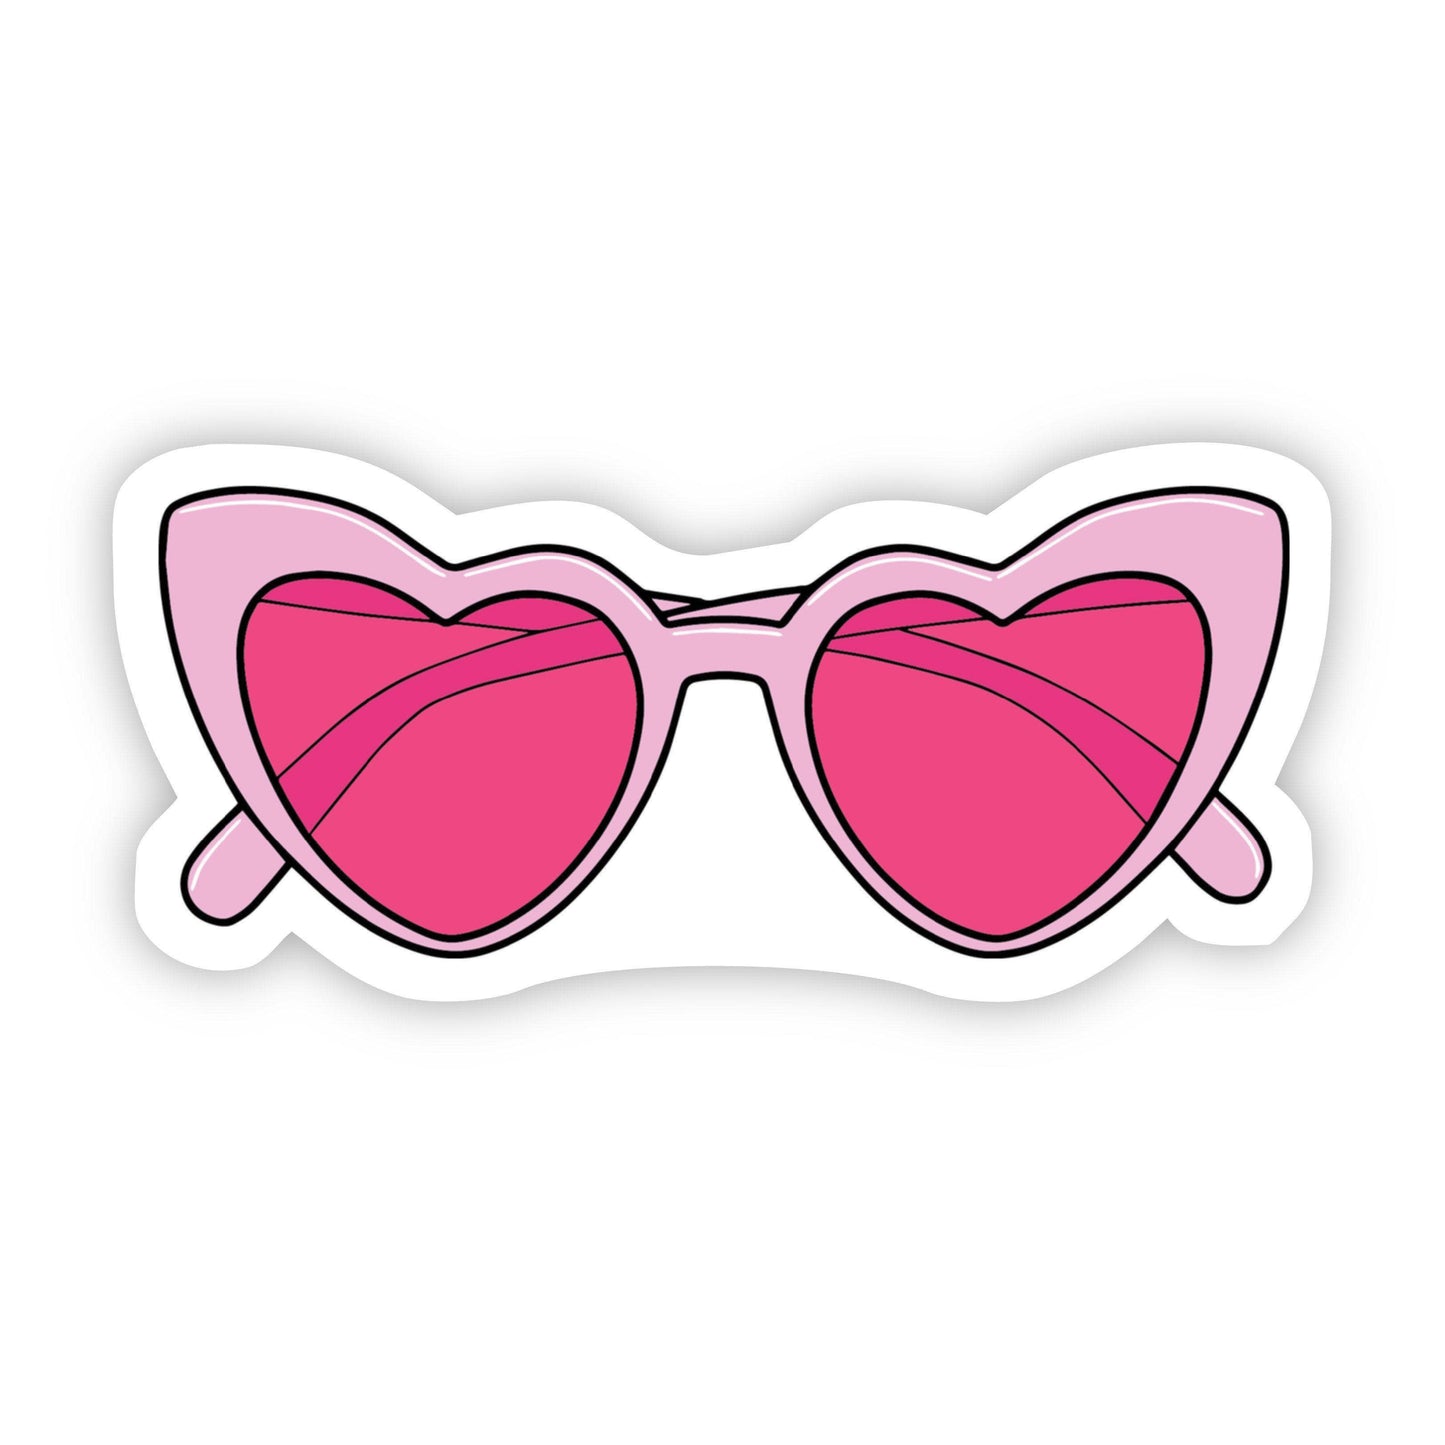 Big Moods - "Pink Heart Sunglasses" Aesthetic Sticker